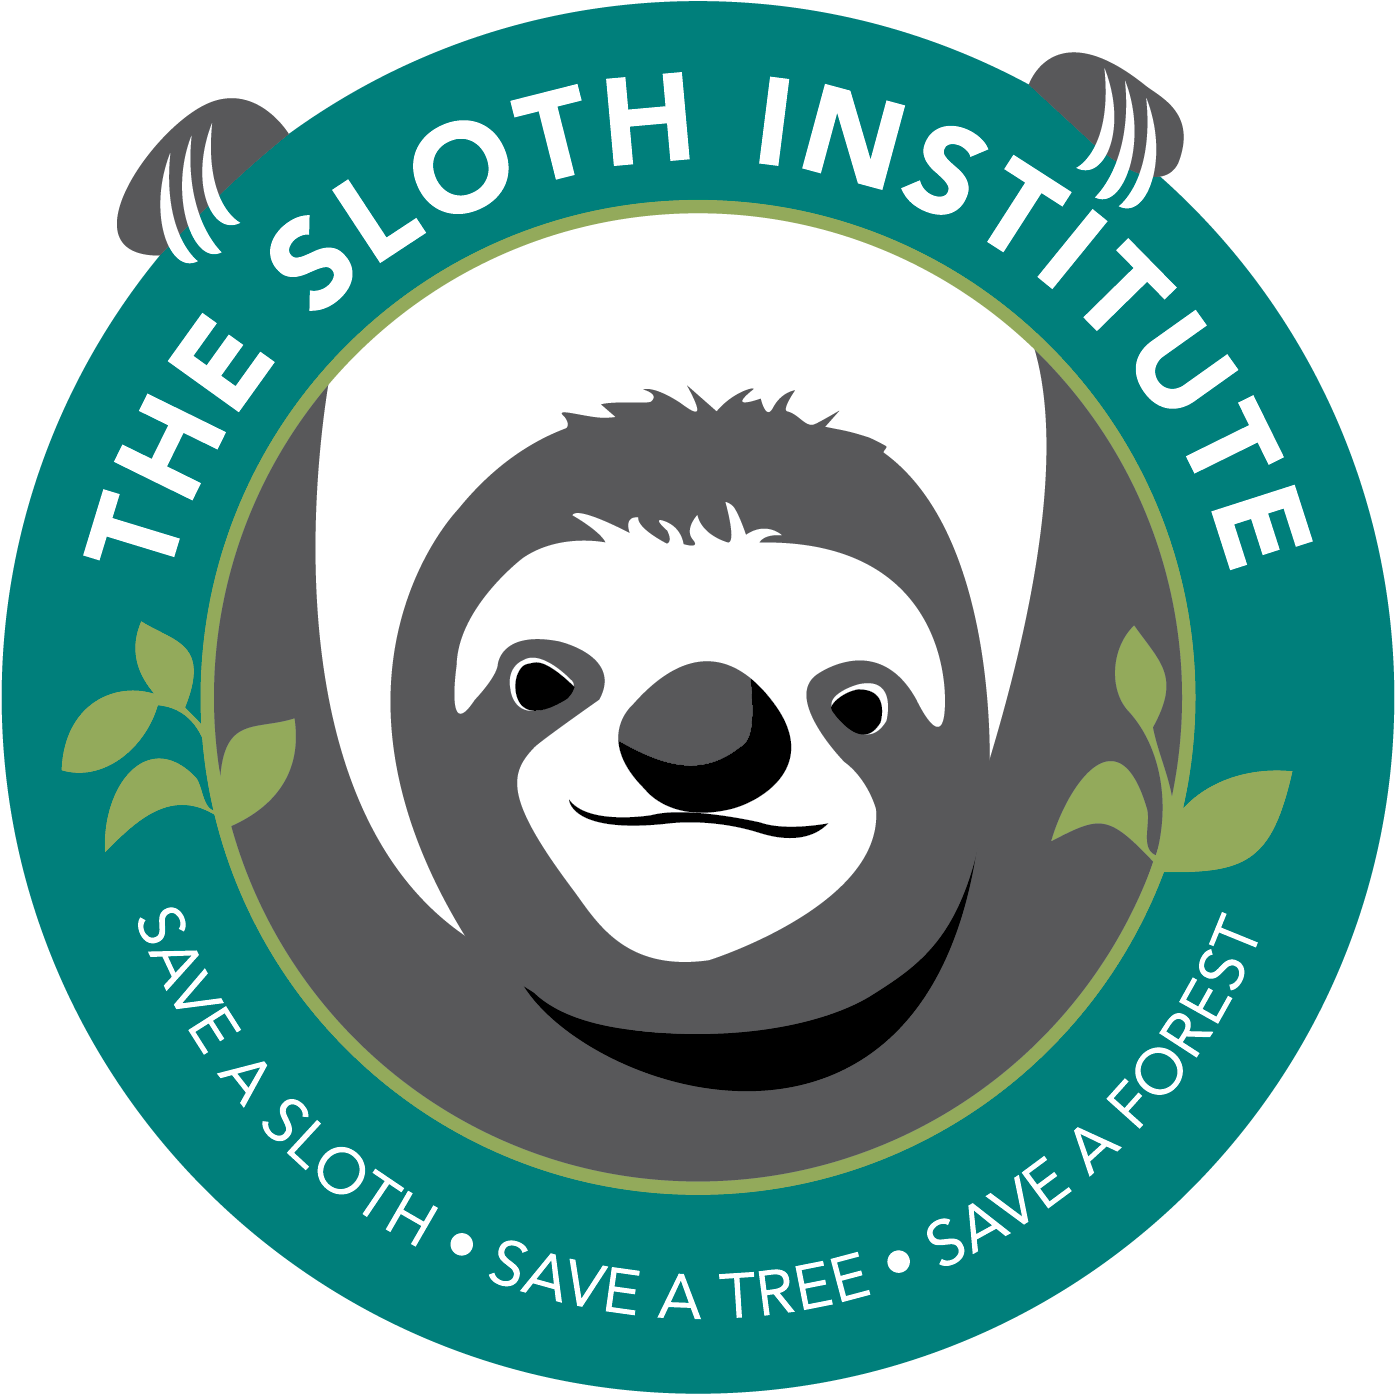 Tsi Costa Rica Logo - Sloth Institute Costa Rica (1460x1520)